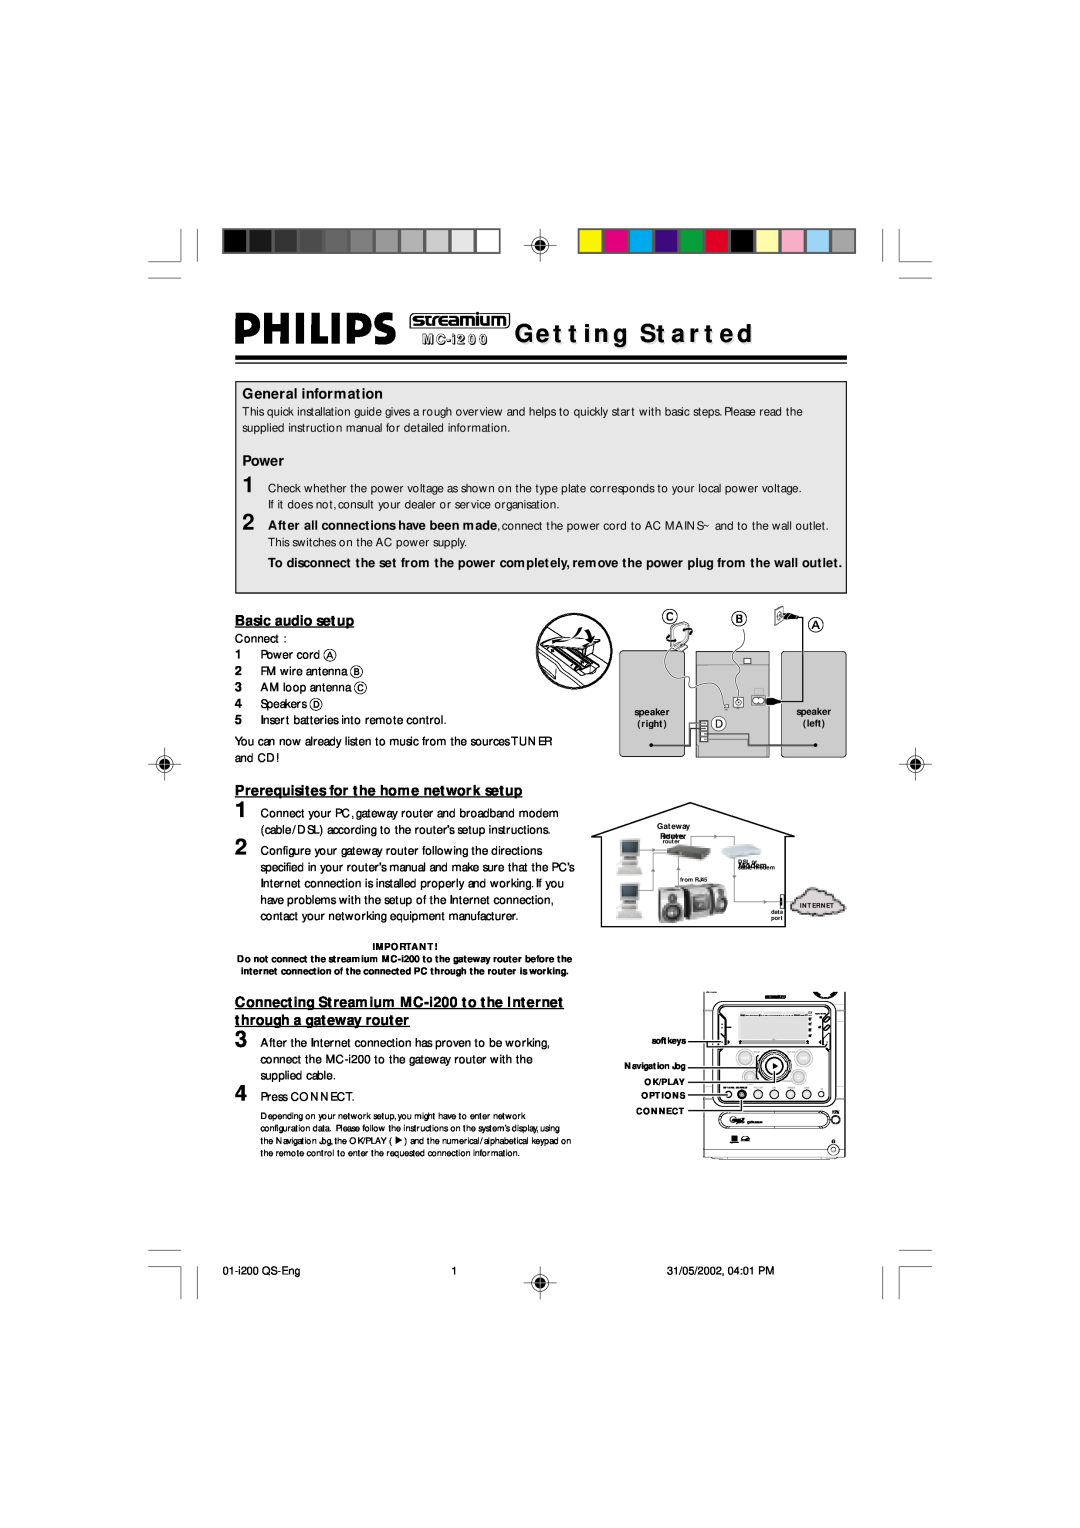 Philips MC-i200 instruction manual General information, Power, Basic audio setup, Prerequisites for the home network setup 